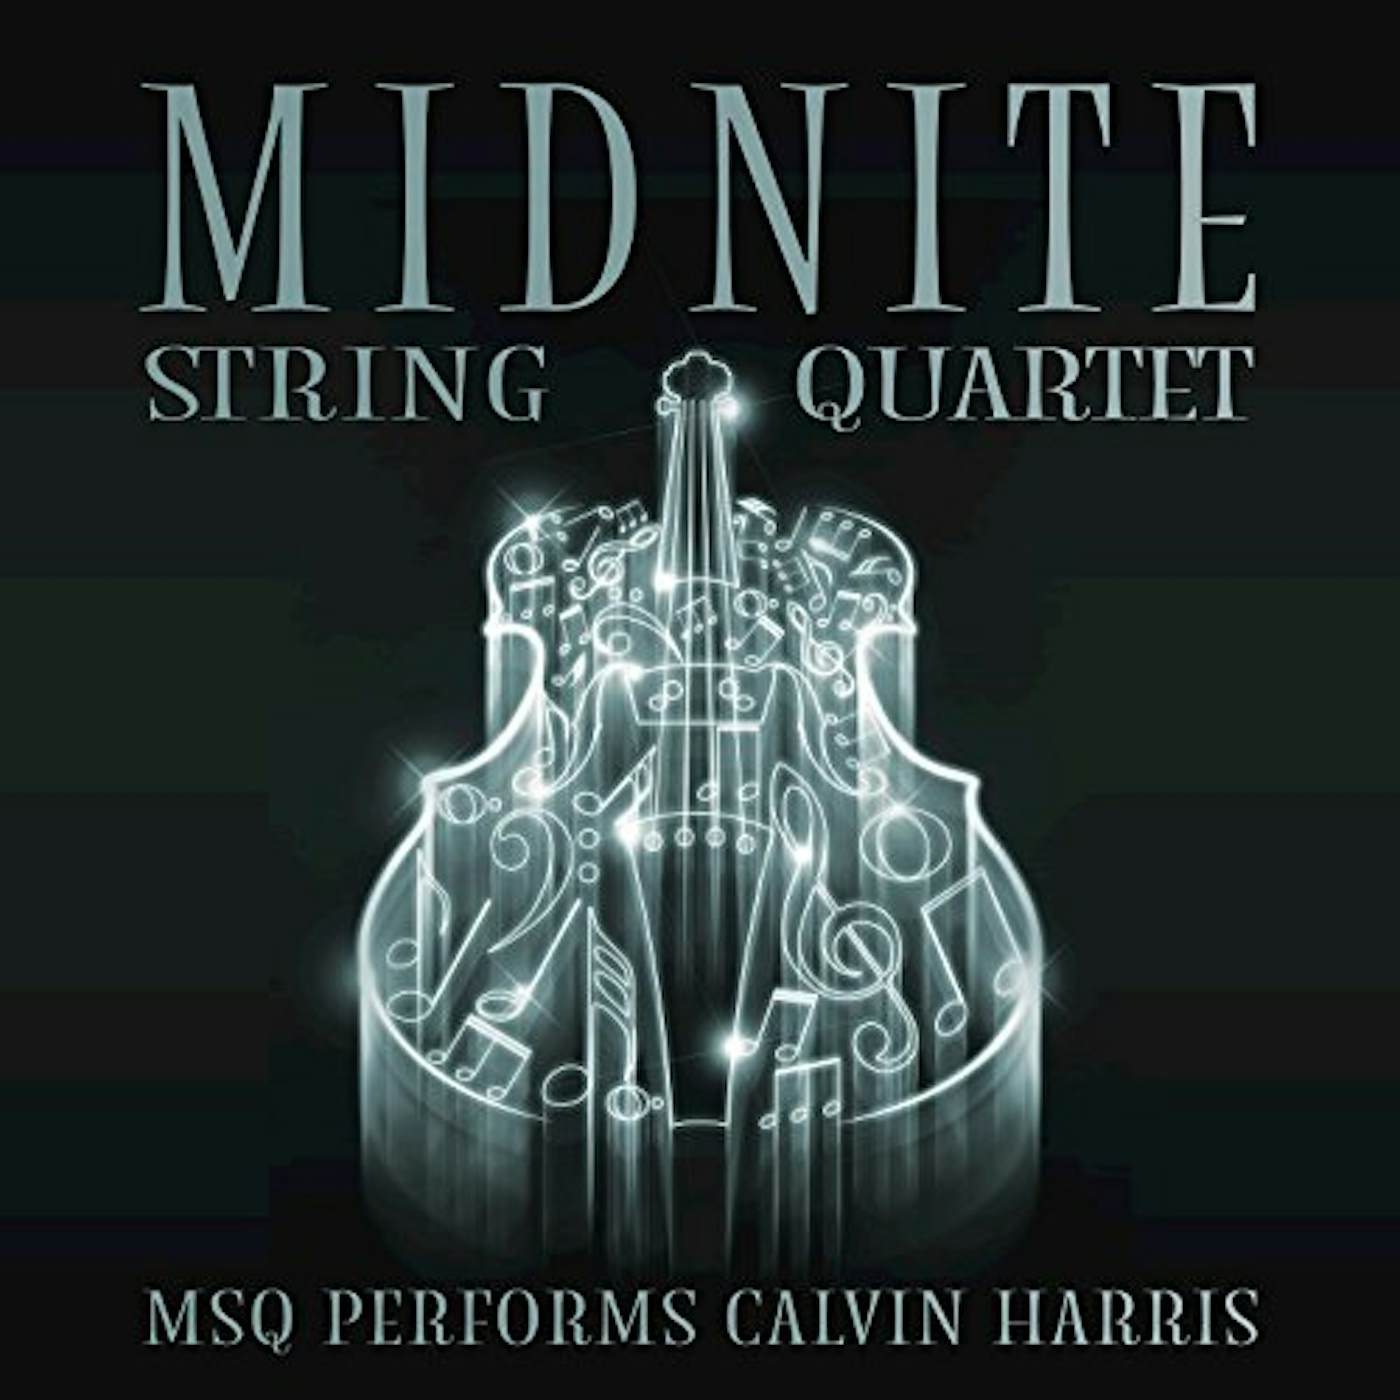 Midnite String Quartet MSQ PERFORMS CALVIN HARRIS CD